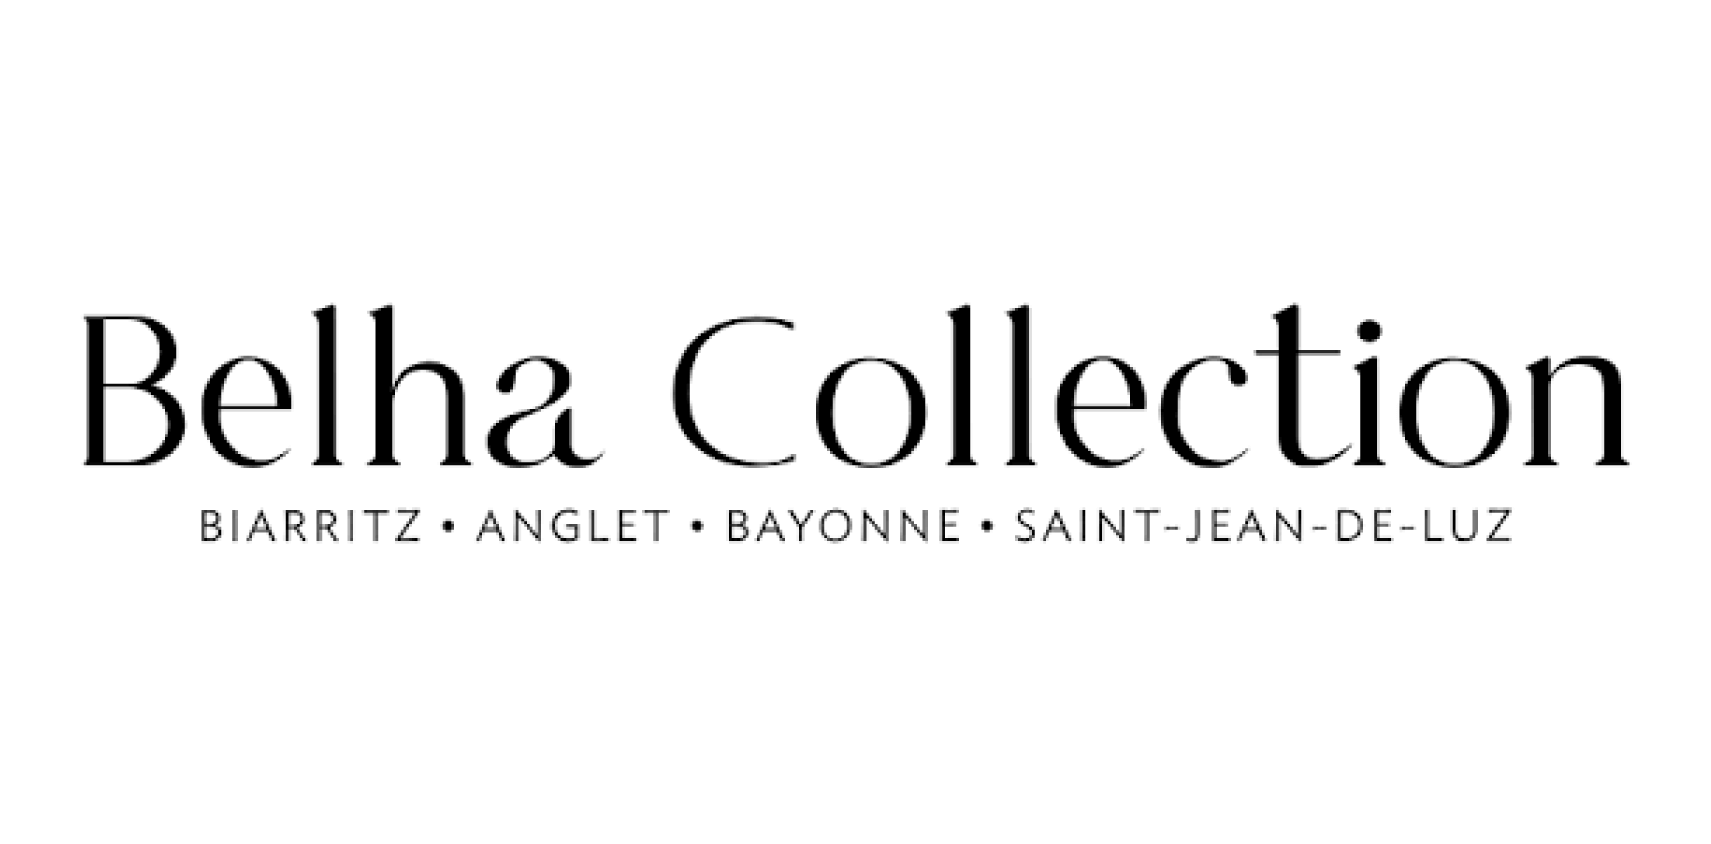 belha collection logo